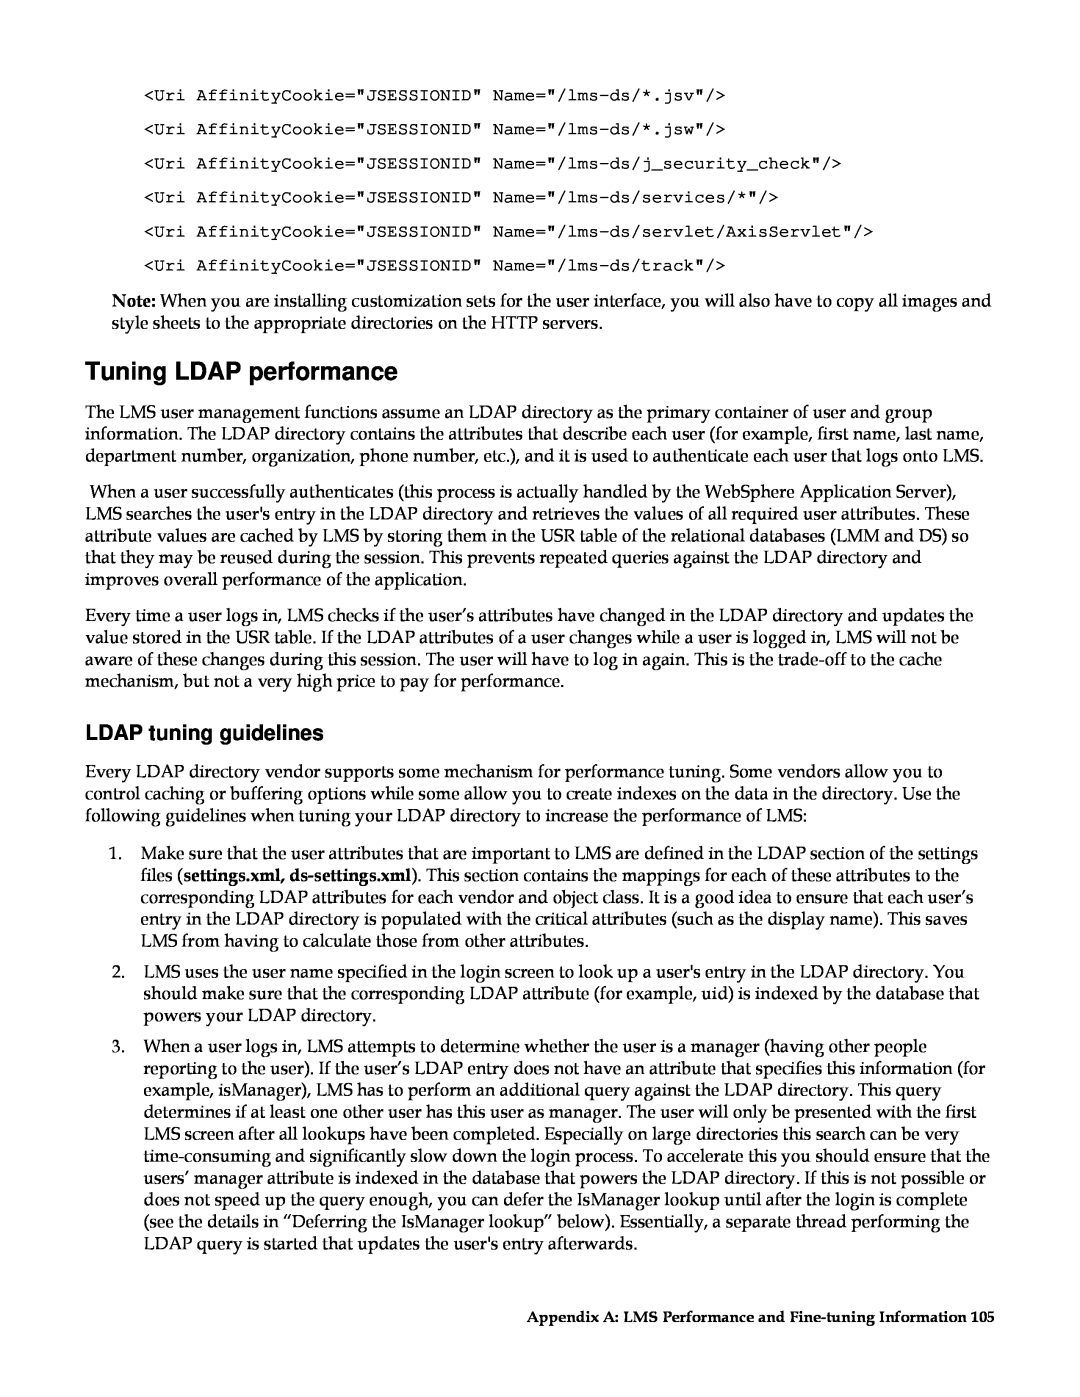 IBM G210-1784-00 manual Tuning LDAP performance, LDAP tuning guidelines 